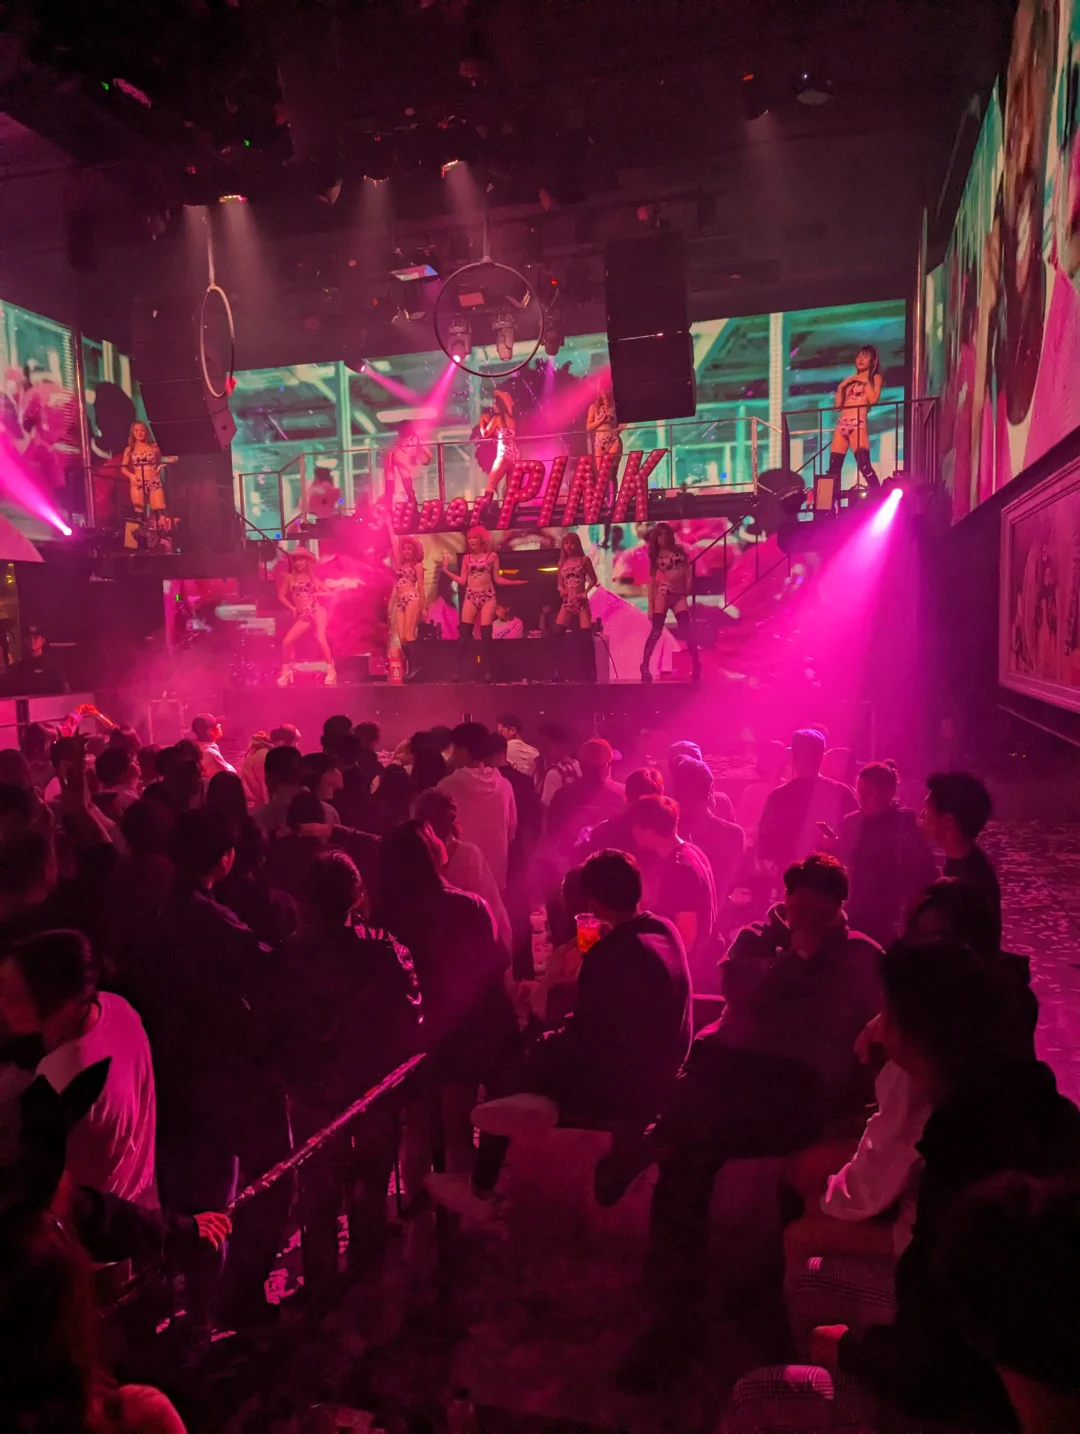 Osaka-Japan's big version of THE SUPERPINK nightclub, watch girls in short skirts dancing